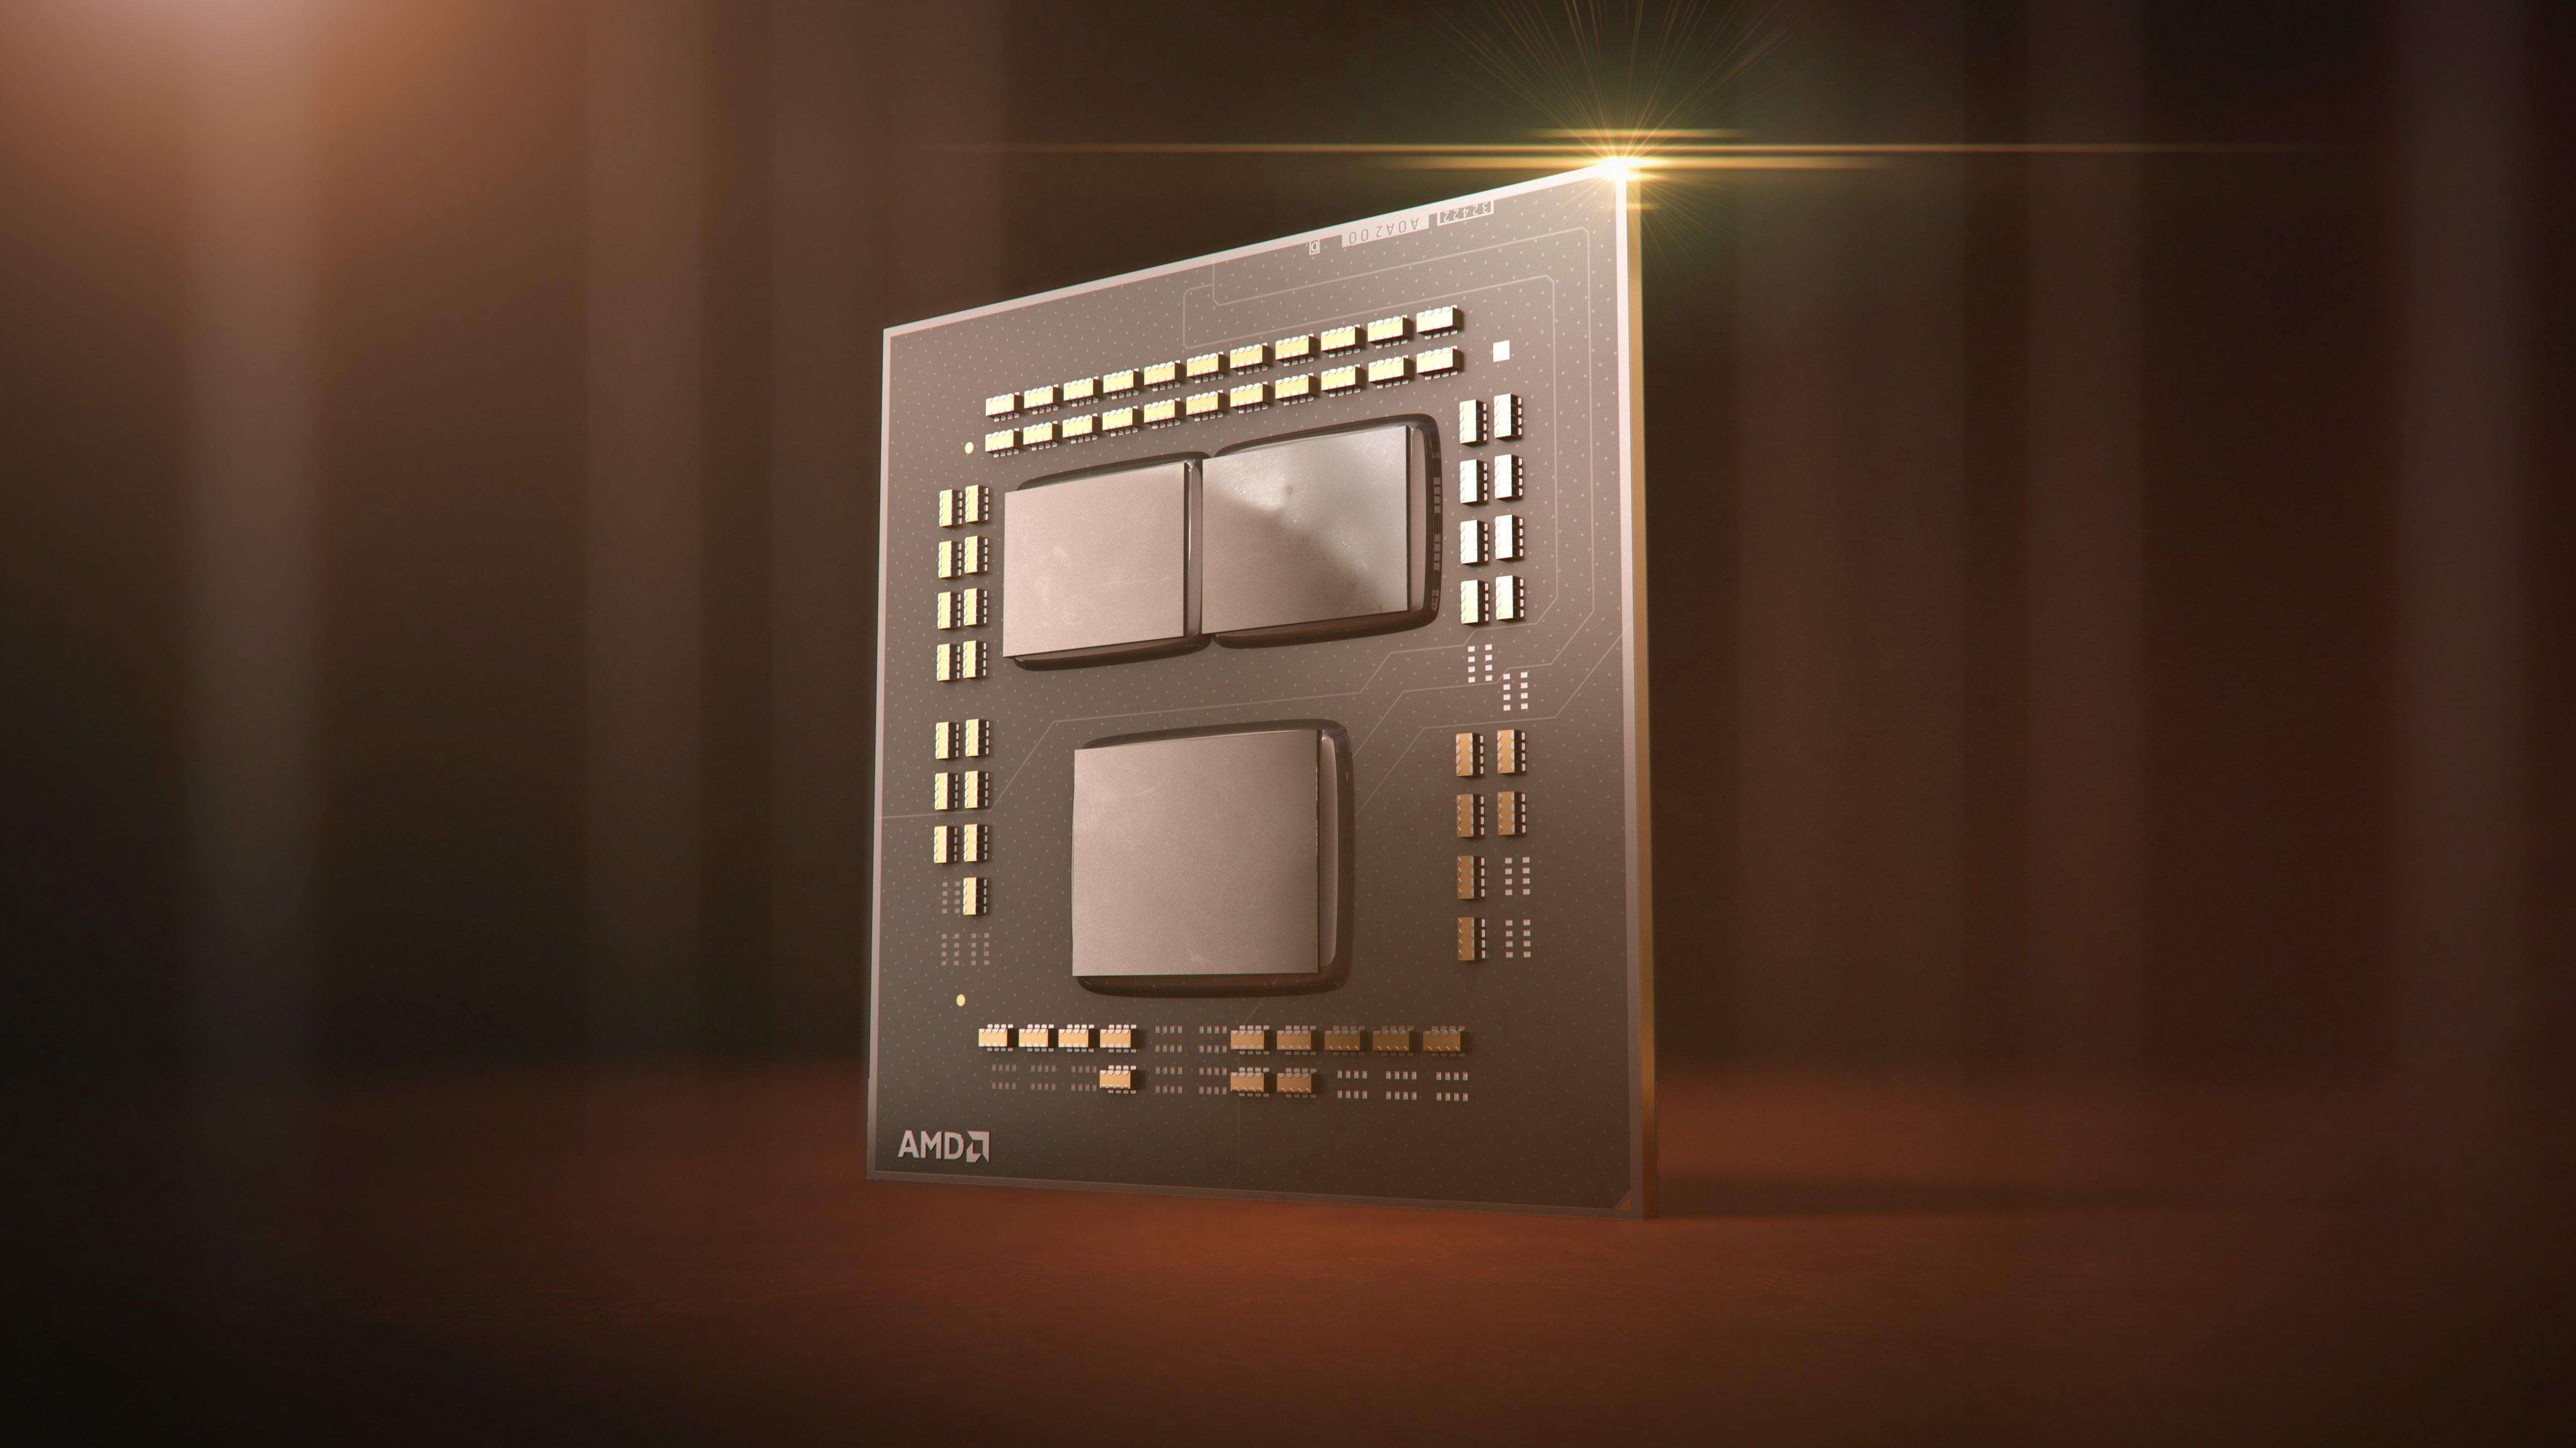 AMD Ryzen 7 5800X (3.8GHz/4.7GHz) 